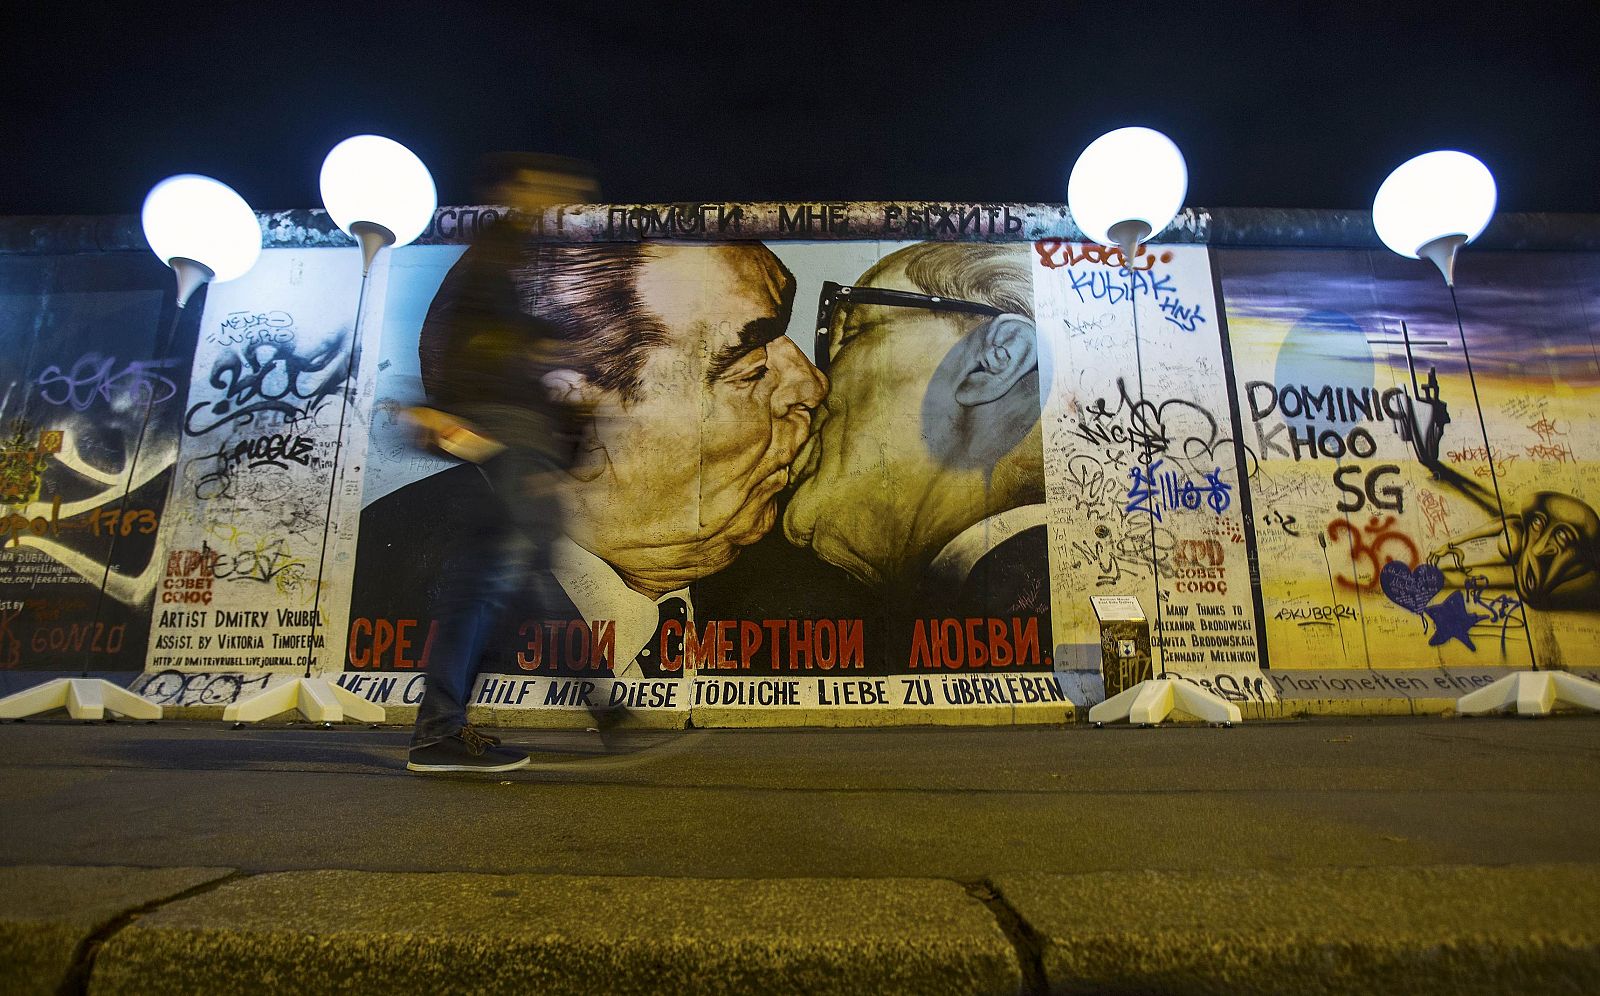 Peerson passes by installation Border of Light along former Berlin Wall location in Berlin